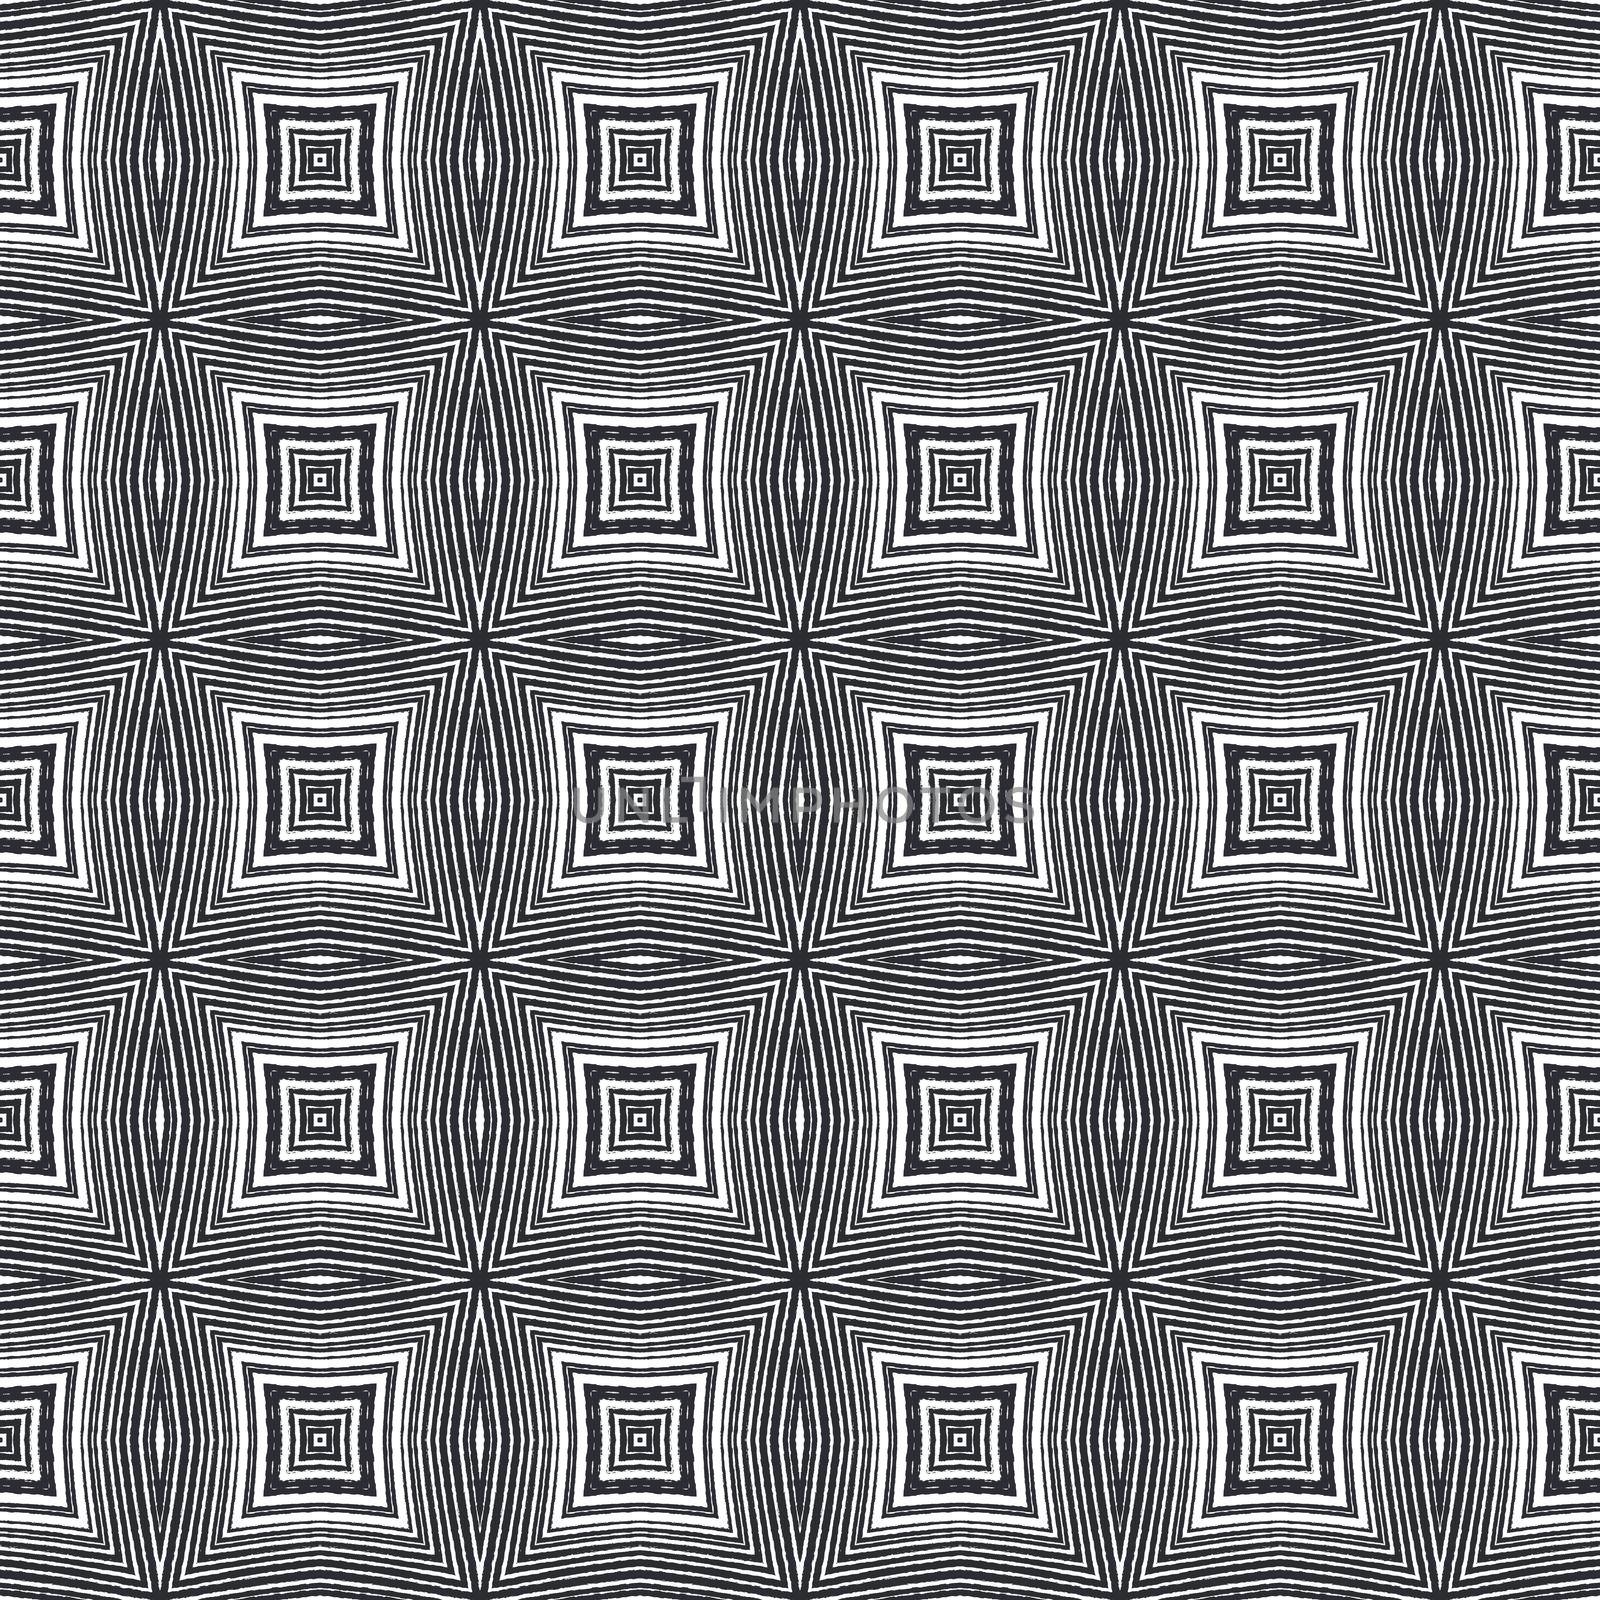 Chevron stripes design. Black symmetrical by beginagain